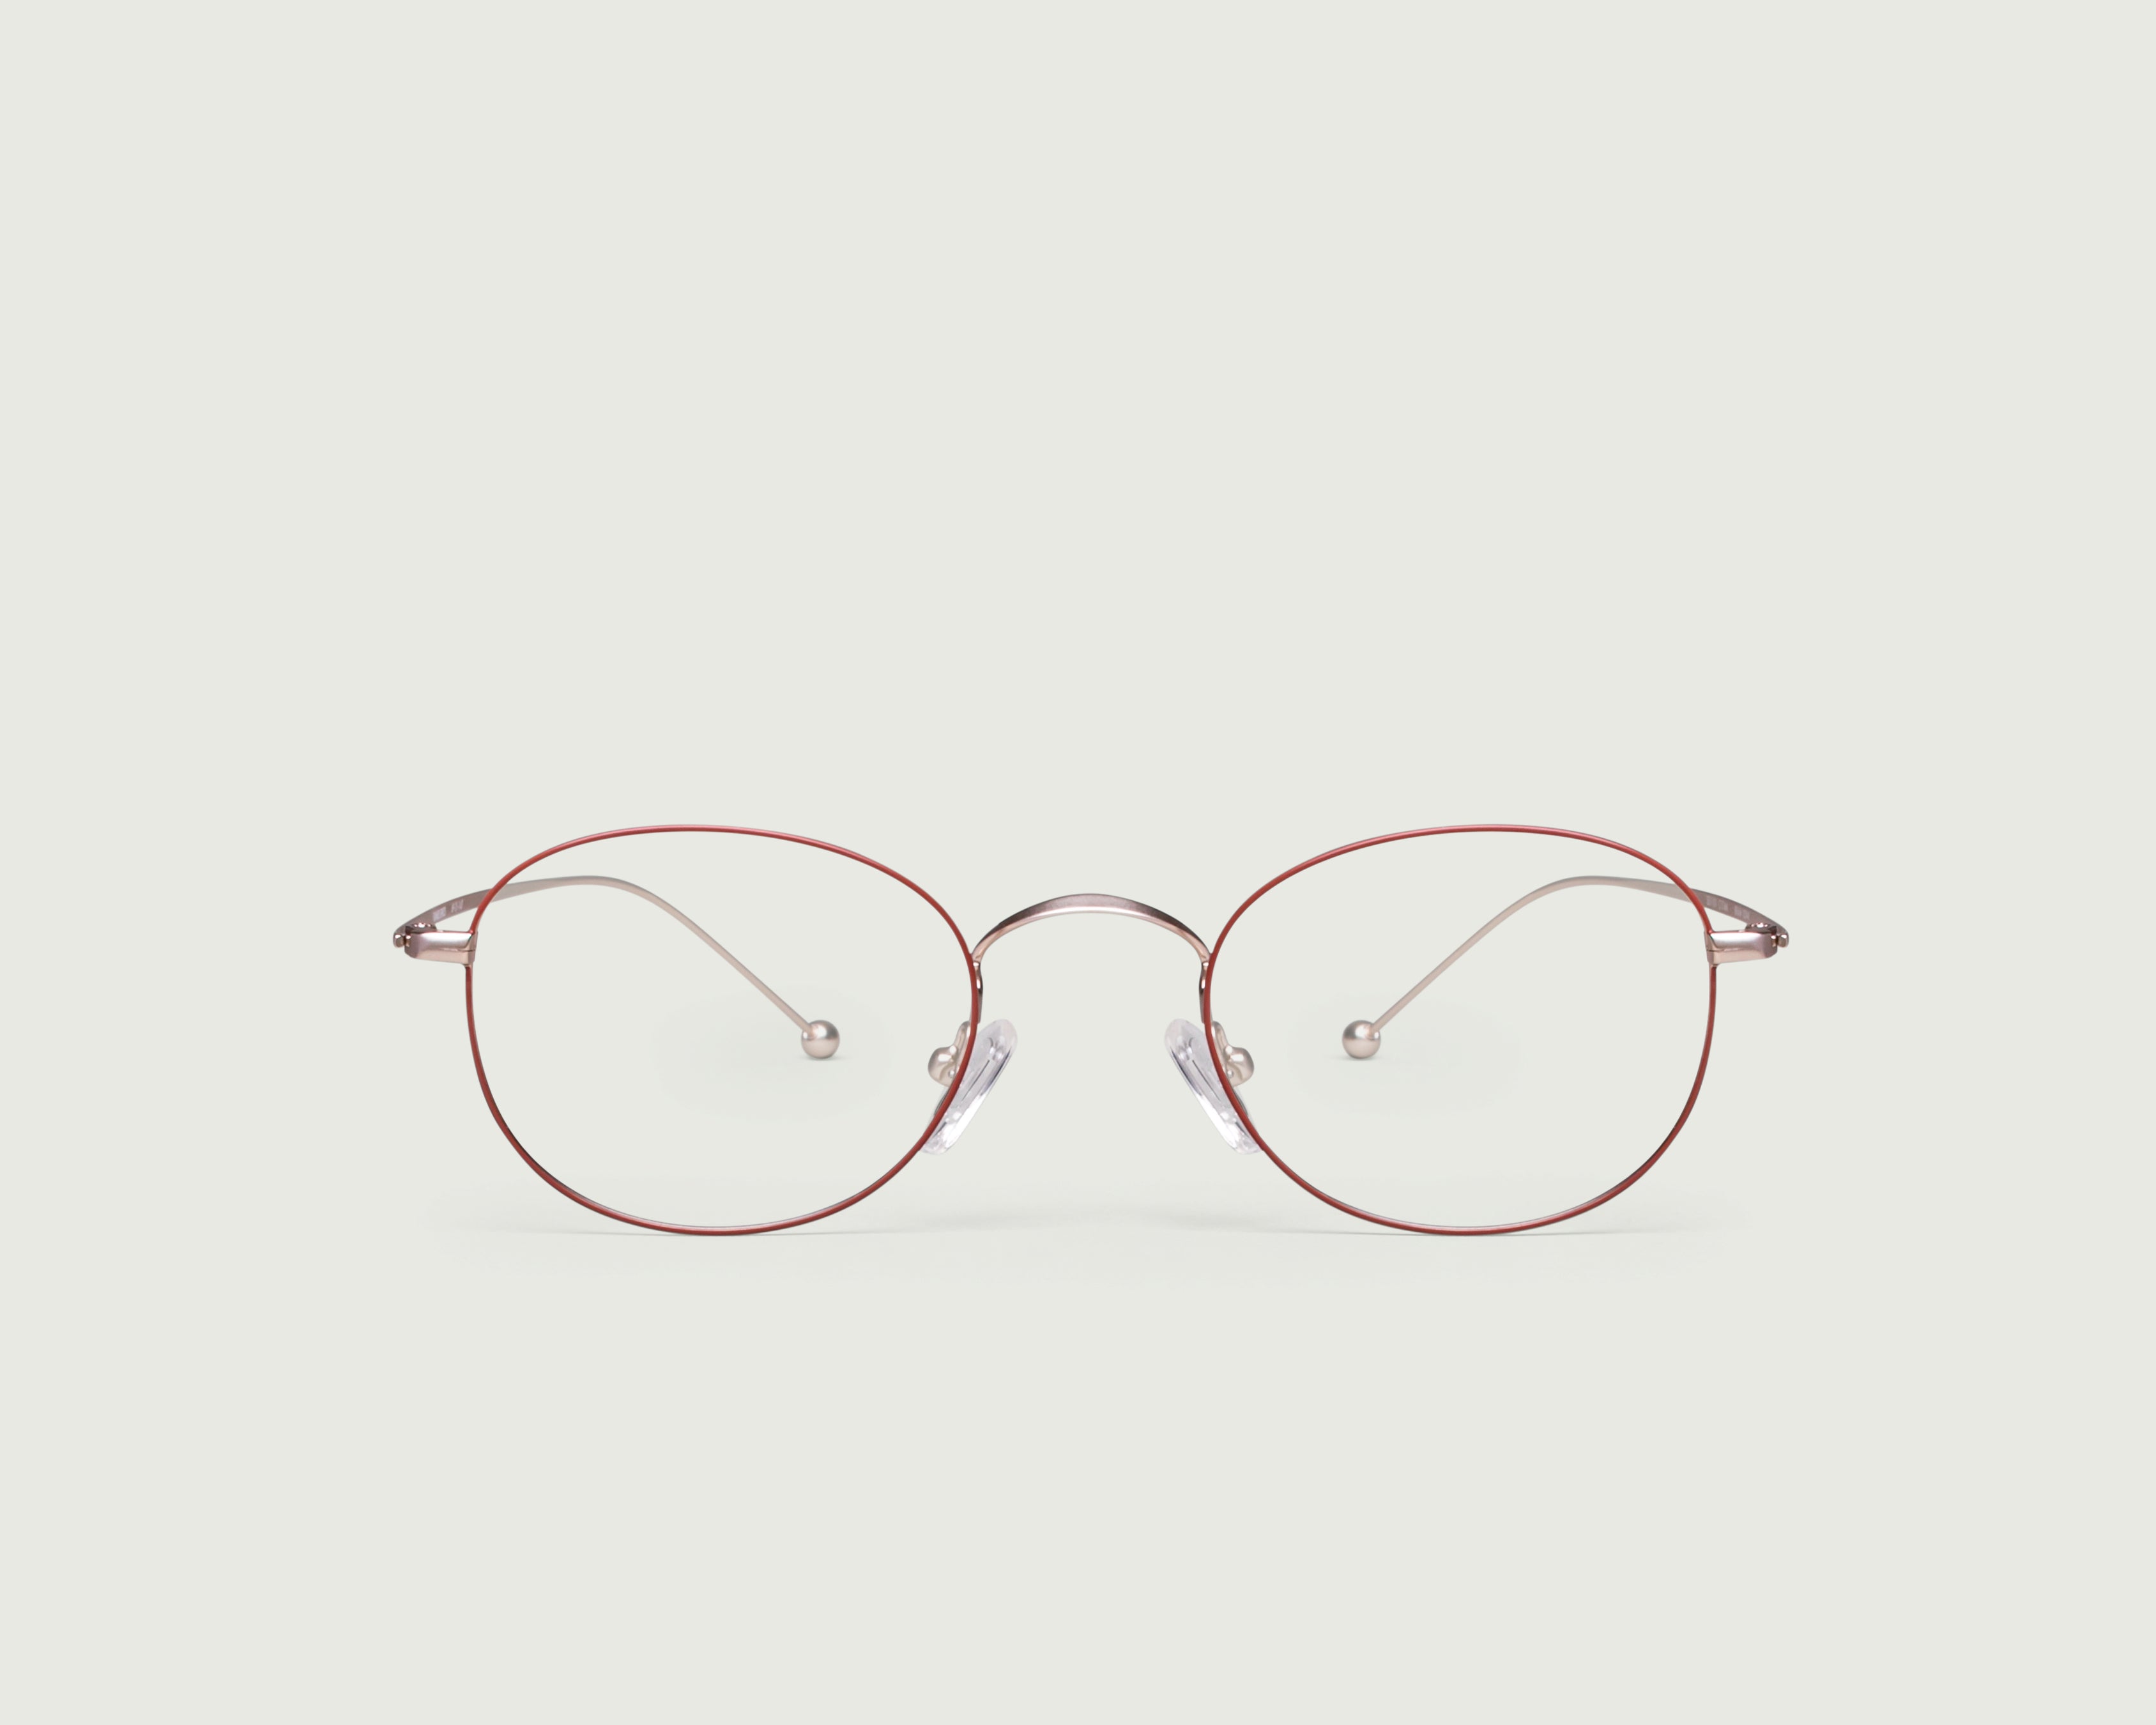 Cedar::Bram Anti-Radiation Glasses round brown metal front